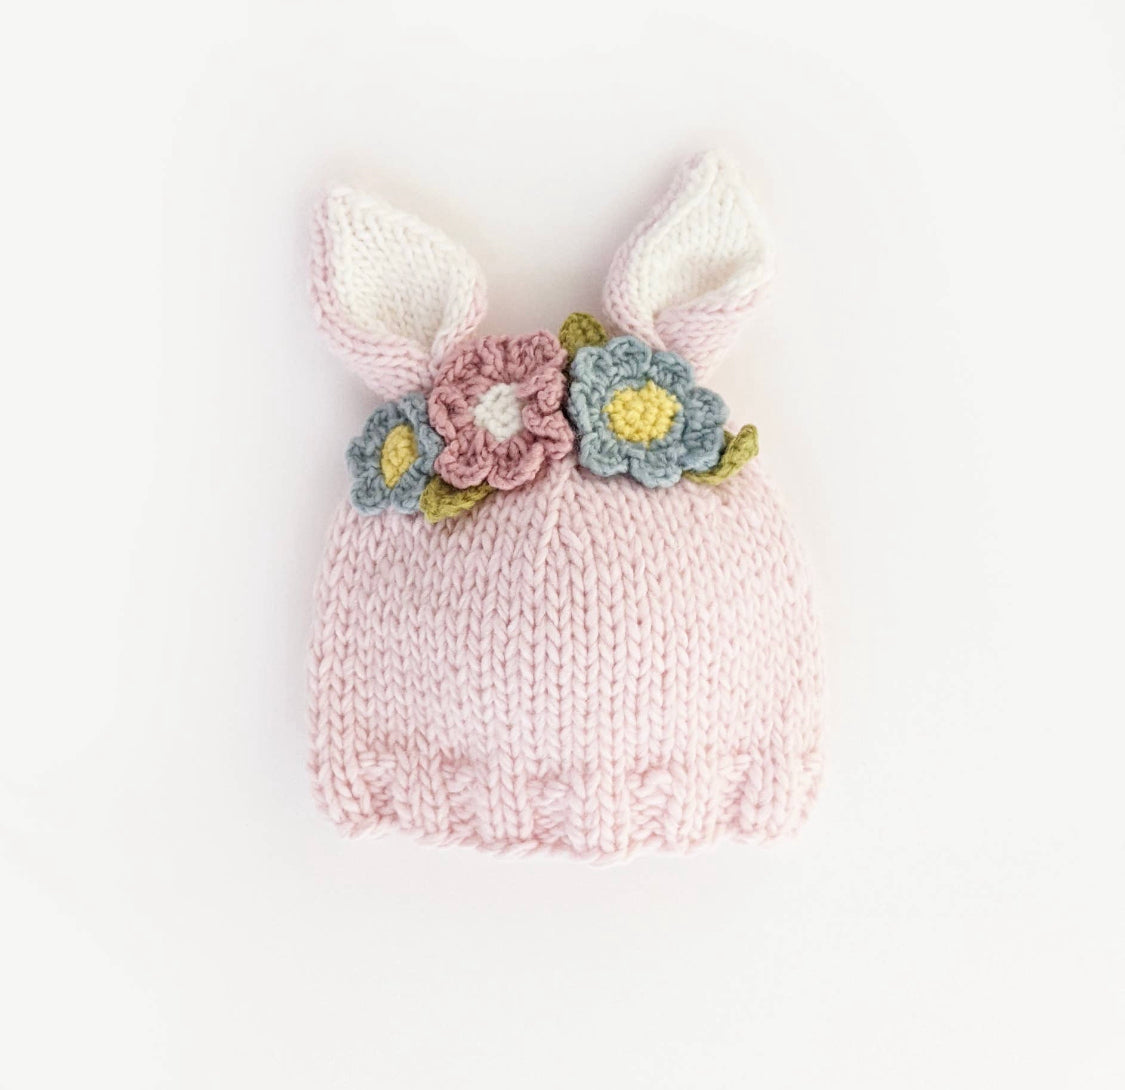 Flower Bunny Ears Knit Beanie